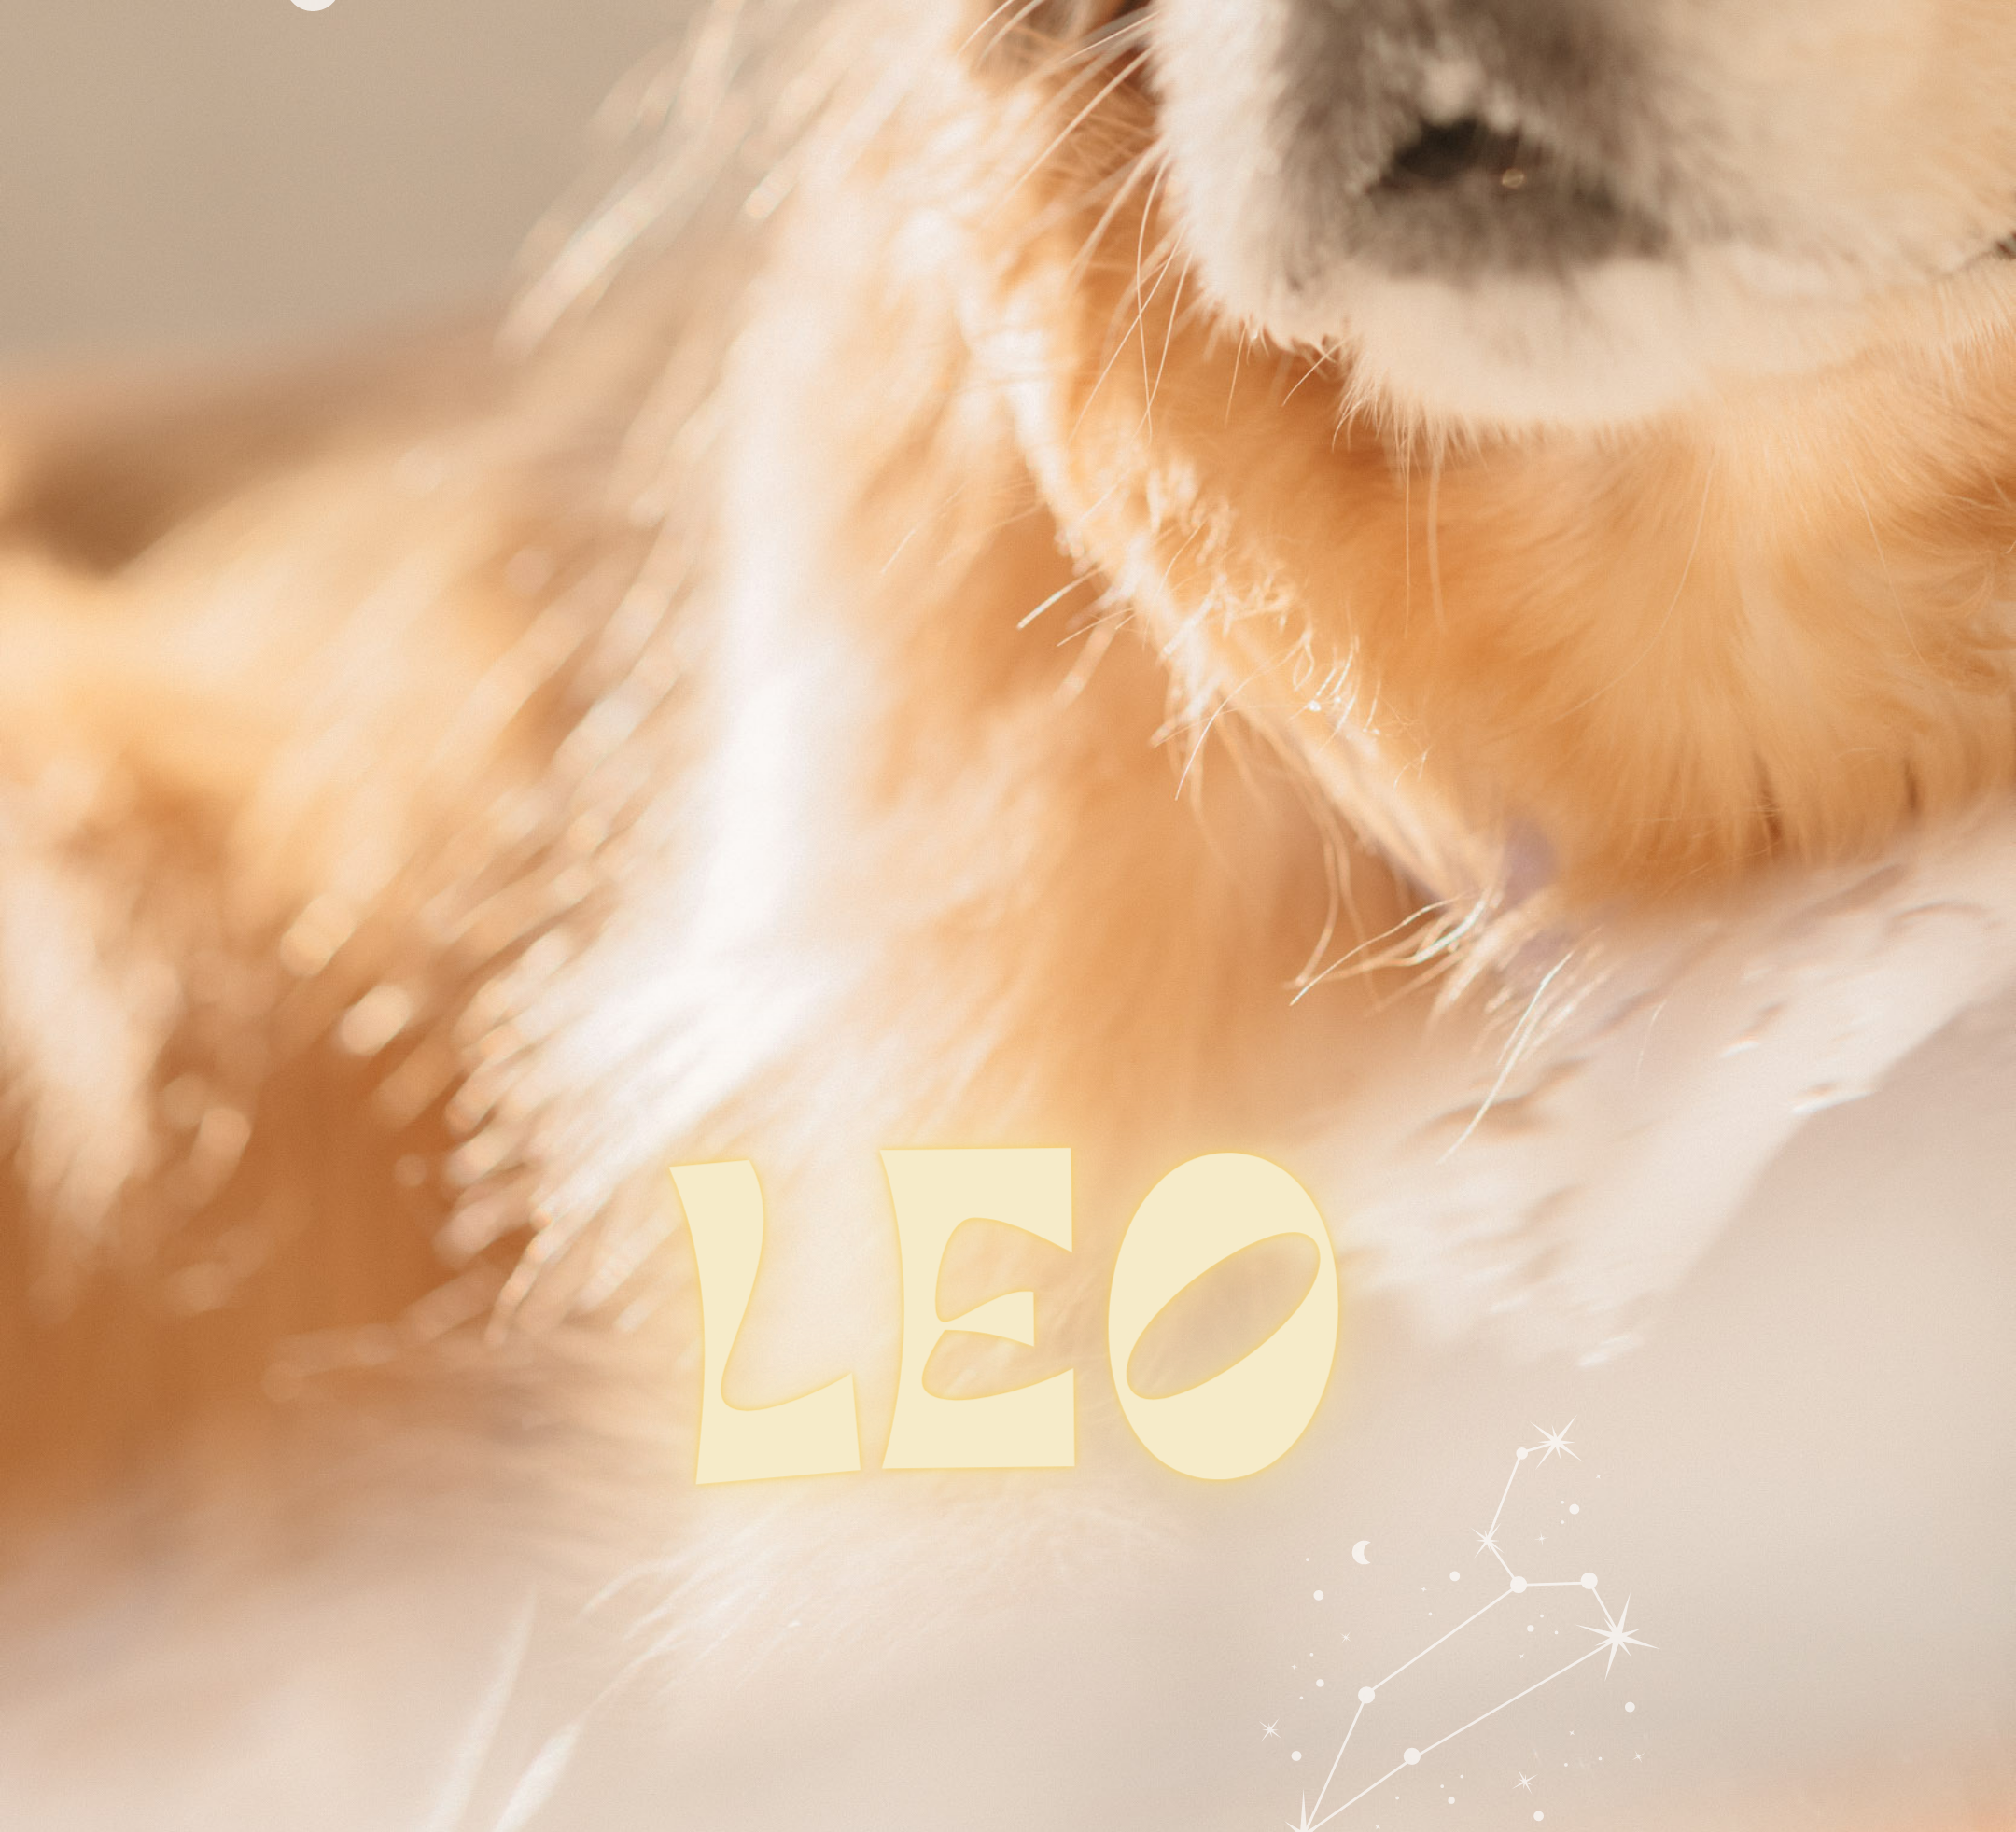 Leos ❋ A captivating blend of charisma & creativity